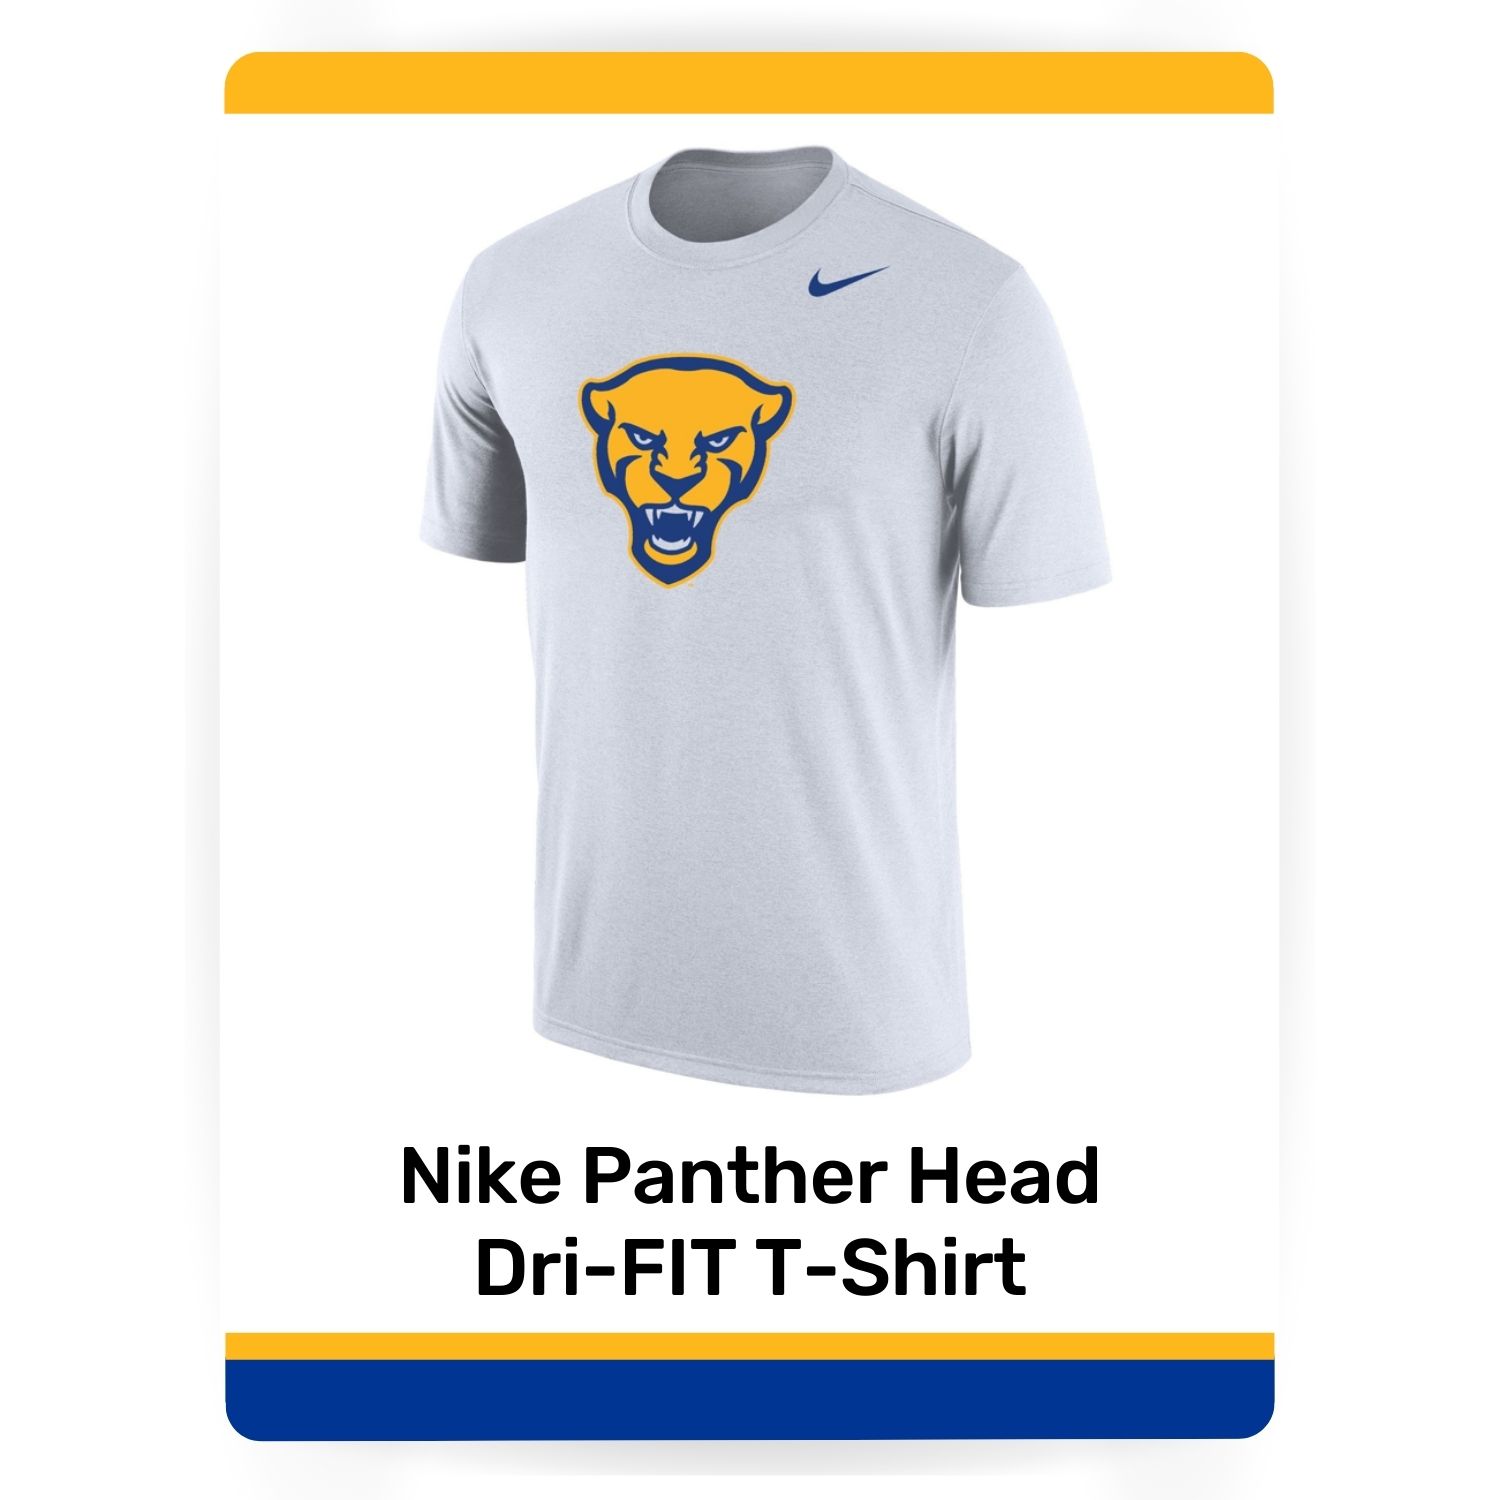 Nike Panther Head Dri-FIT T-Shirt White